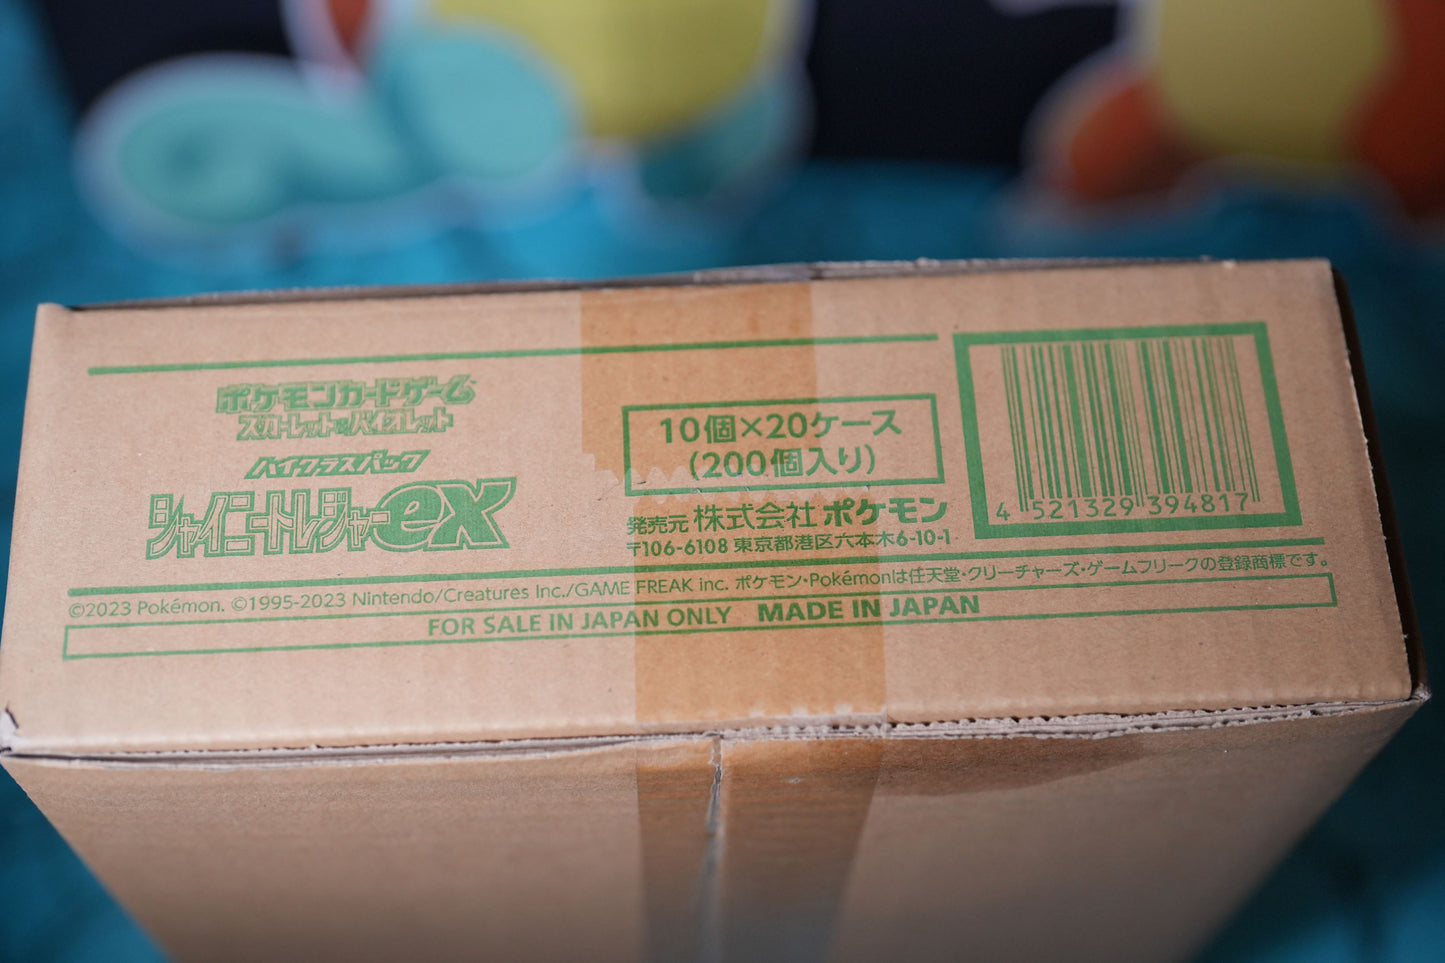 PTCG Japanese Shiny Treasure Booster Box (Factory Sealed Case)